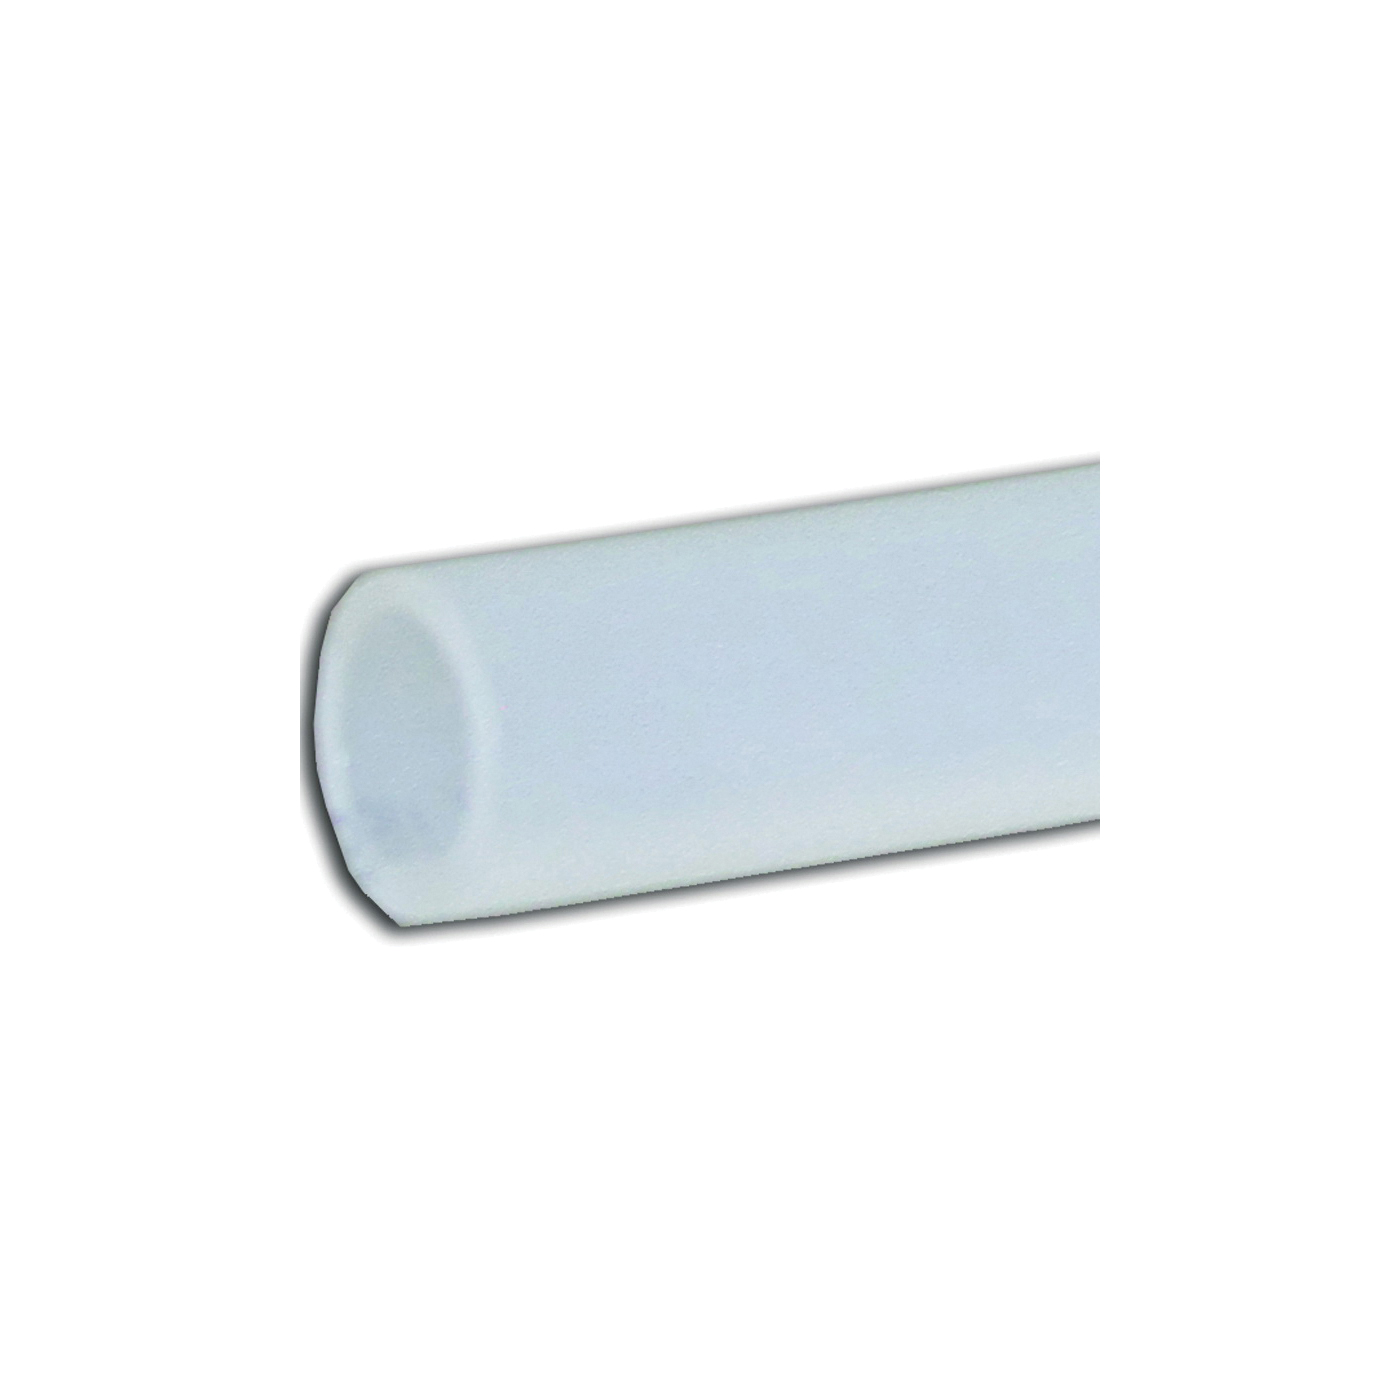 T16 Series T16004001/9001P Pipe Tubing, Plastic, Translucent Milky White, 100 ft L